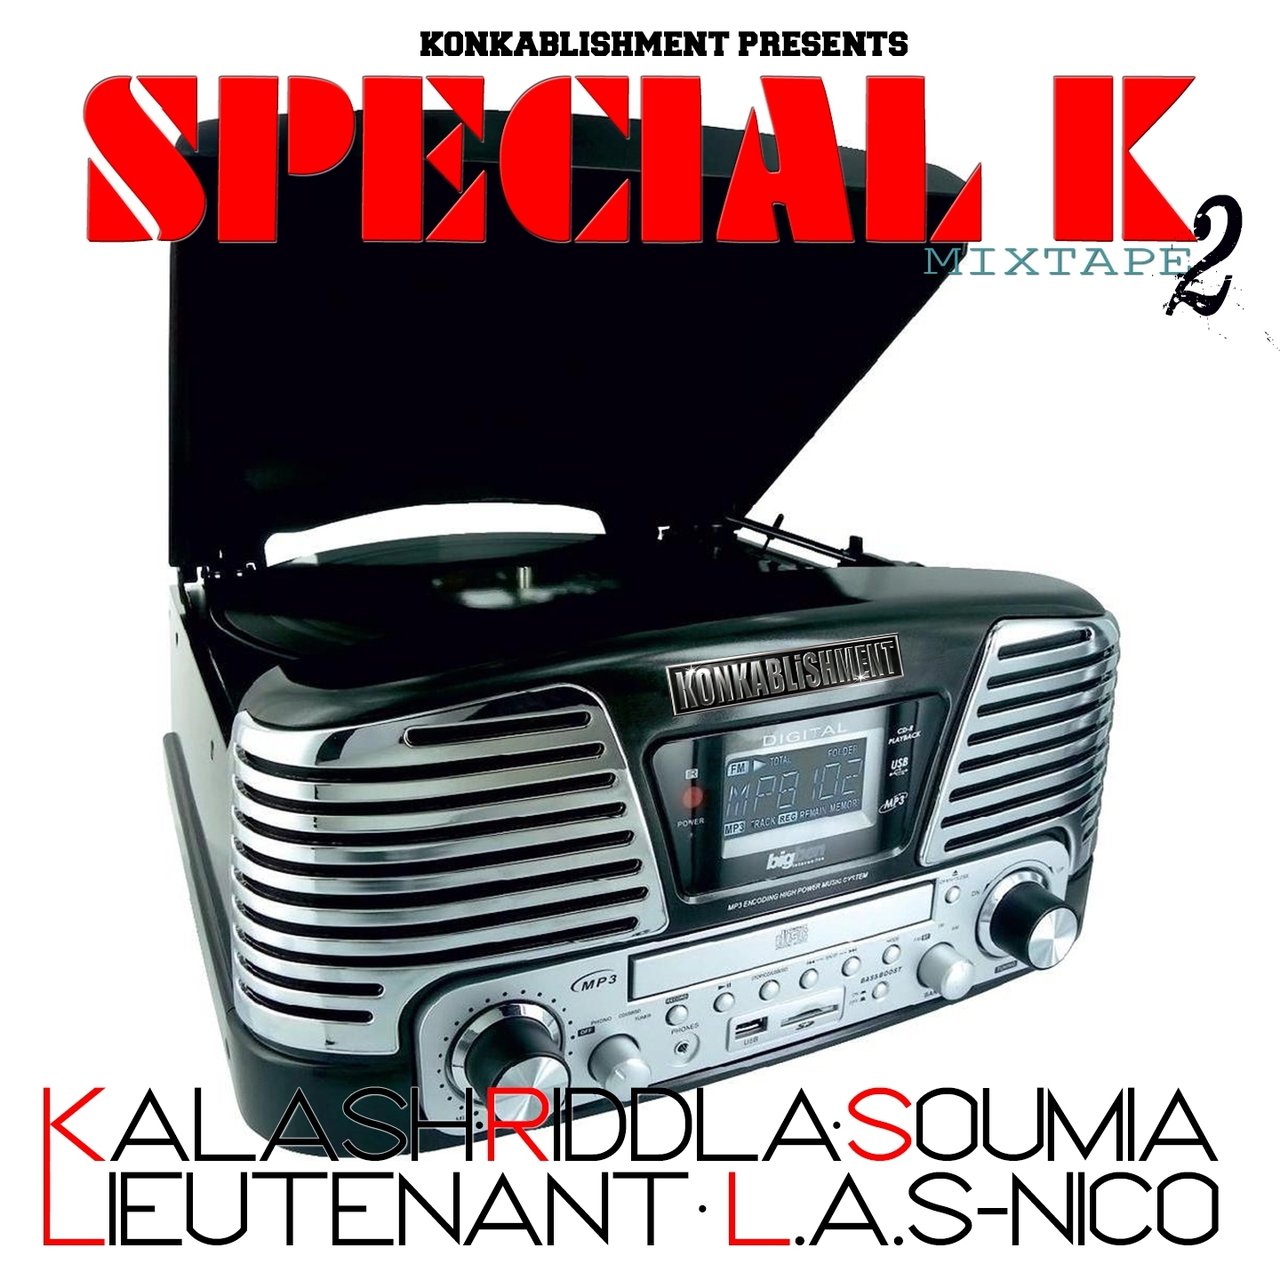 Special K Mixtape 2 (Cover)